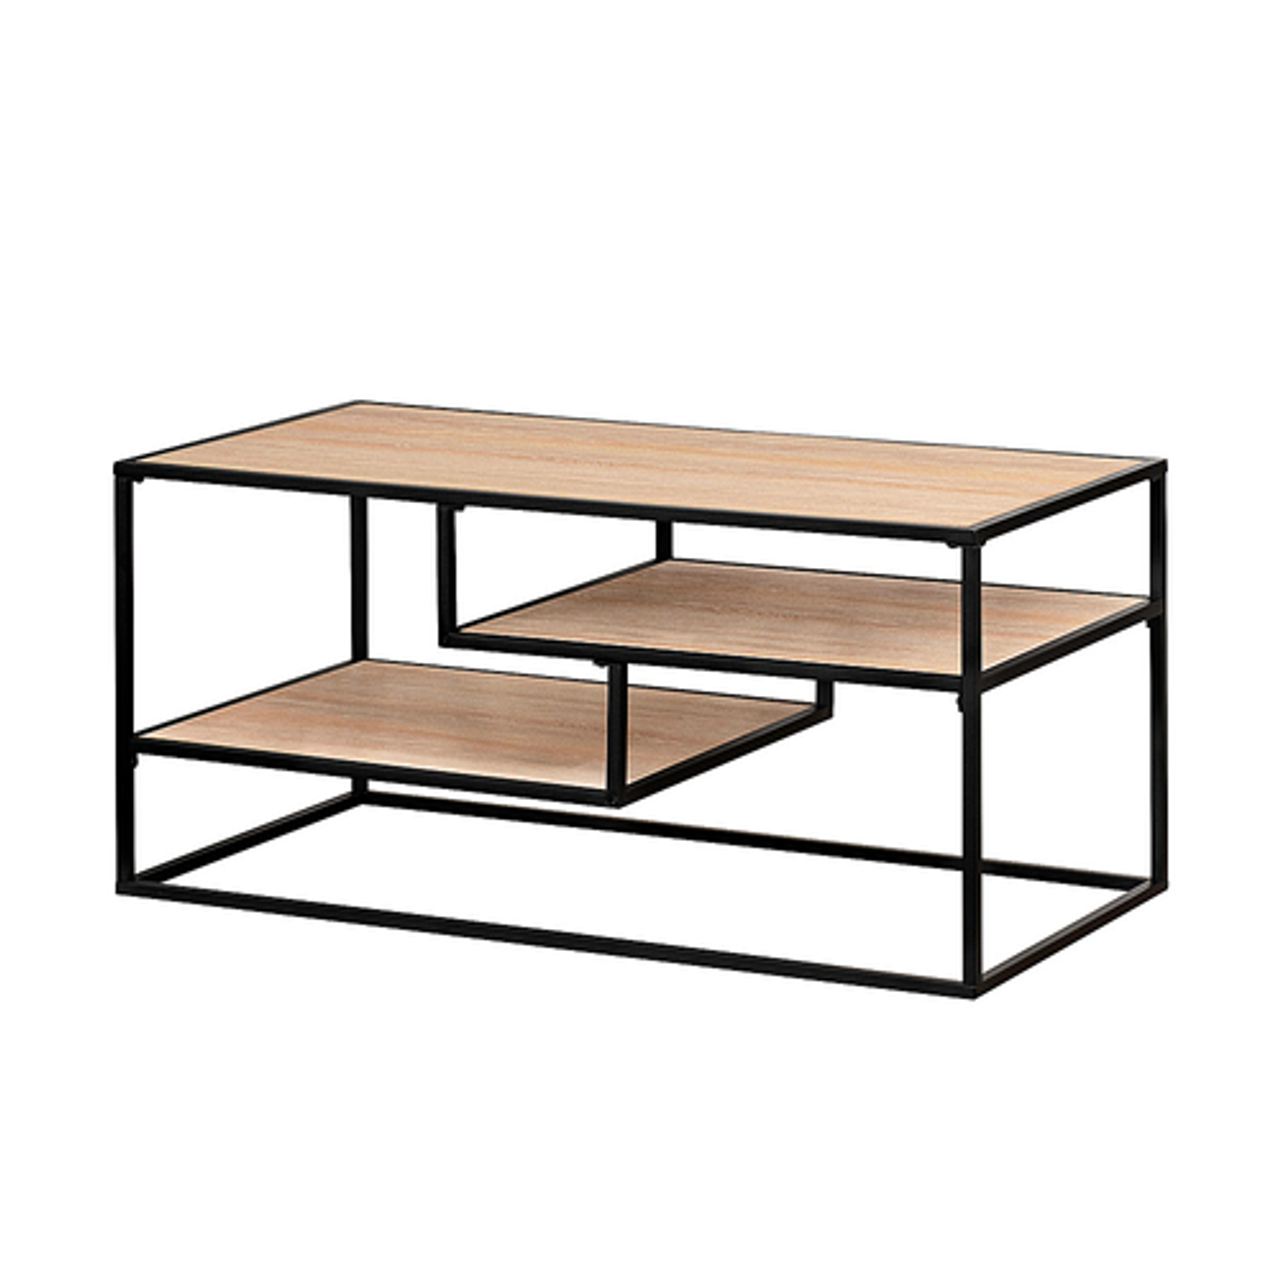 Walker Edison - Modern Minimal Coffee Table with Floating Shelves - Coastal Oak